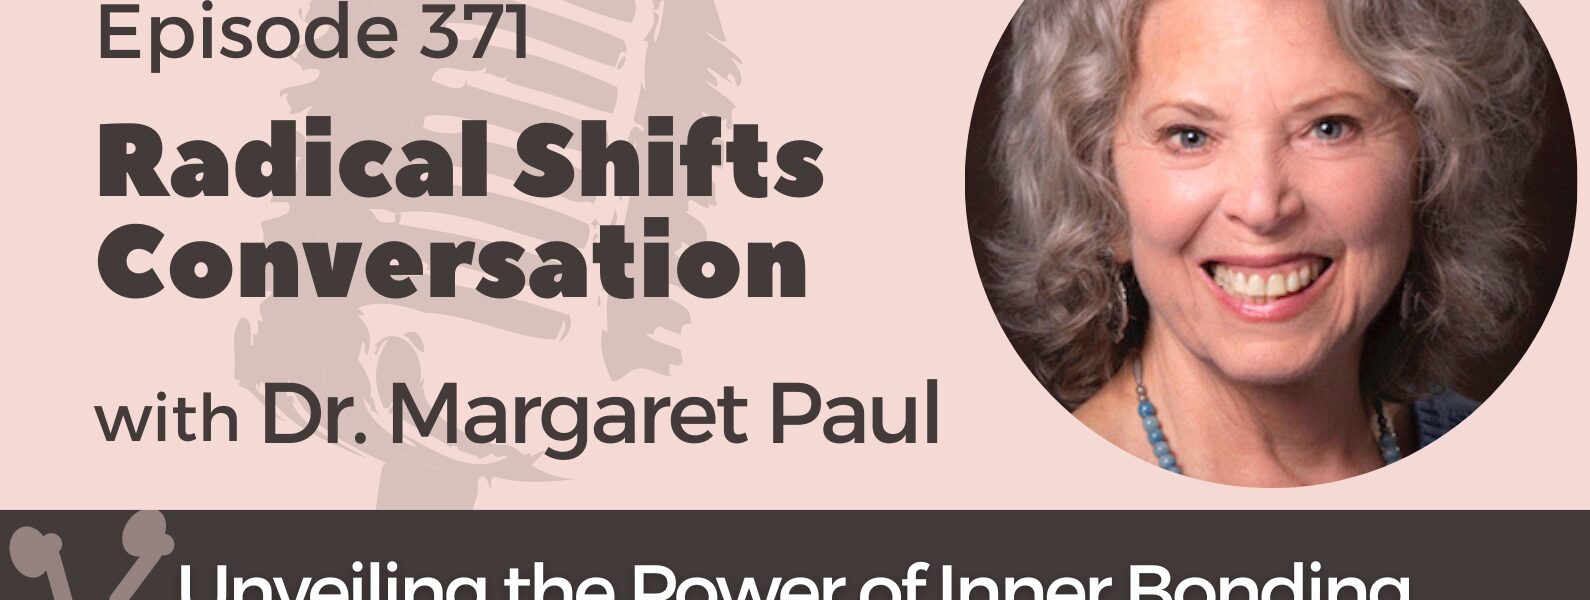 Dr. Margaret Paul